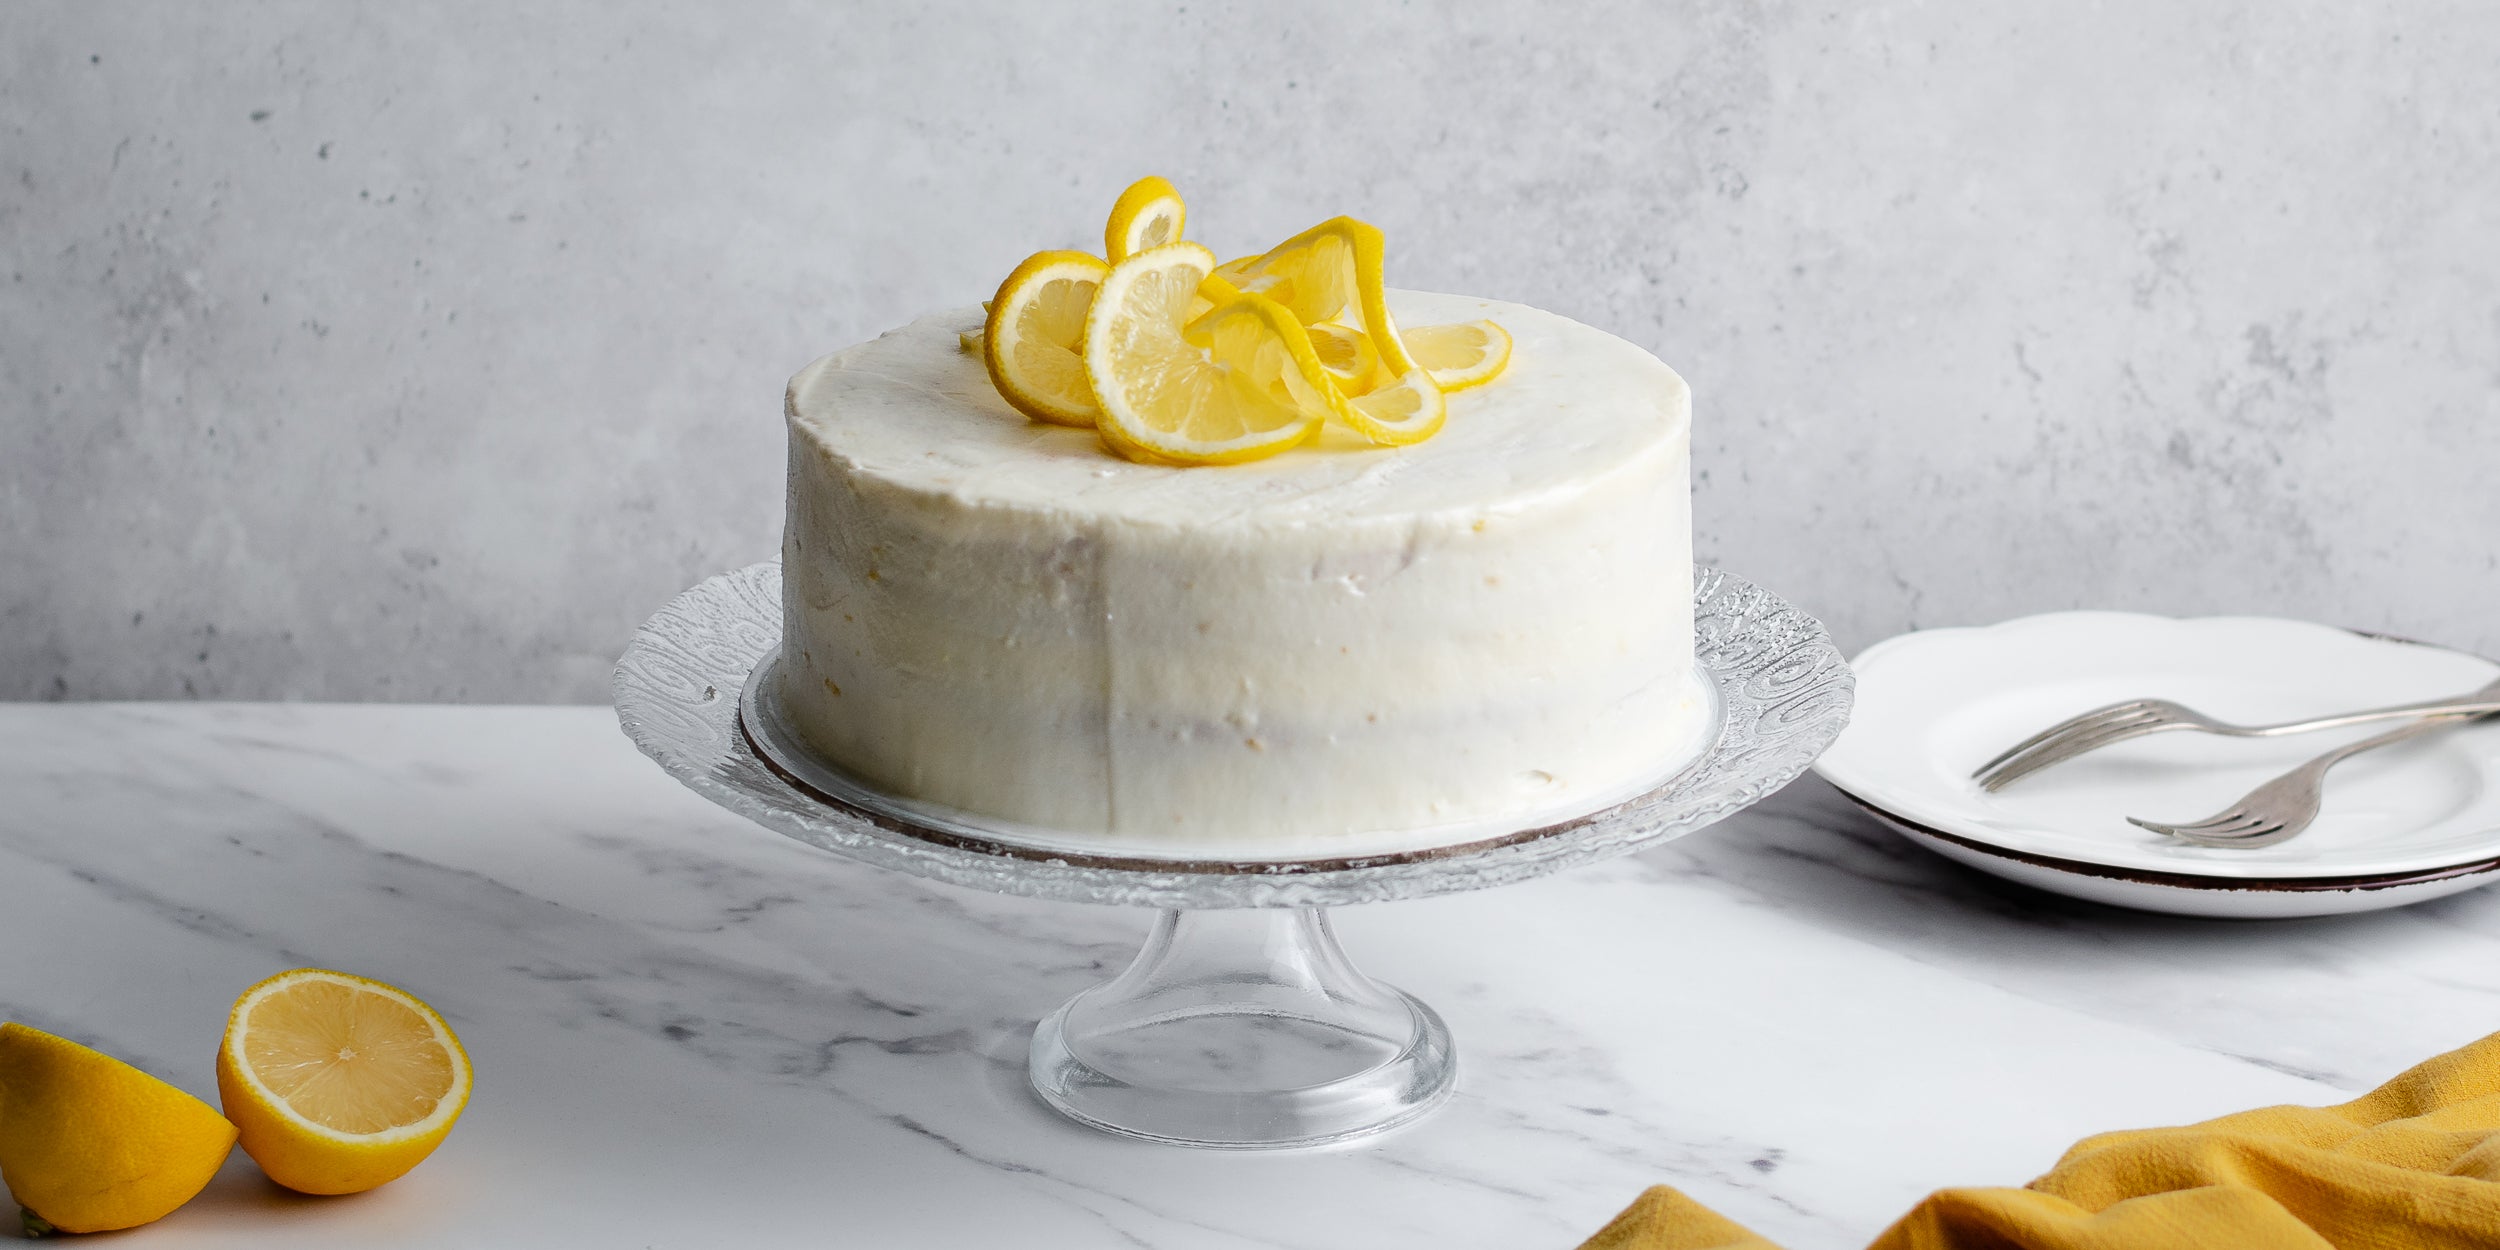 Lemon & Almond Cake